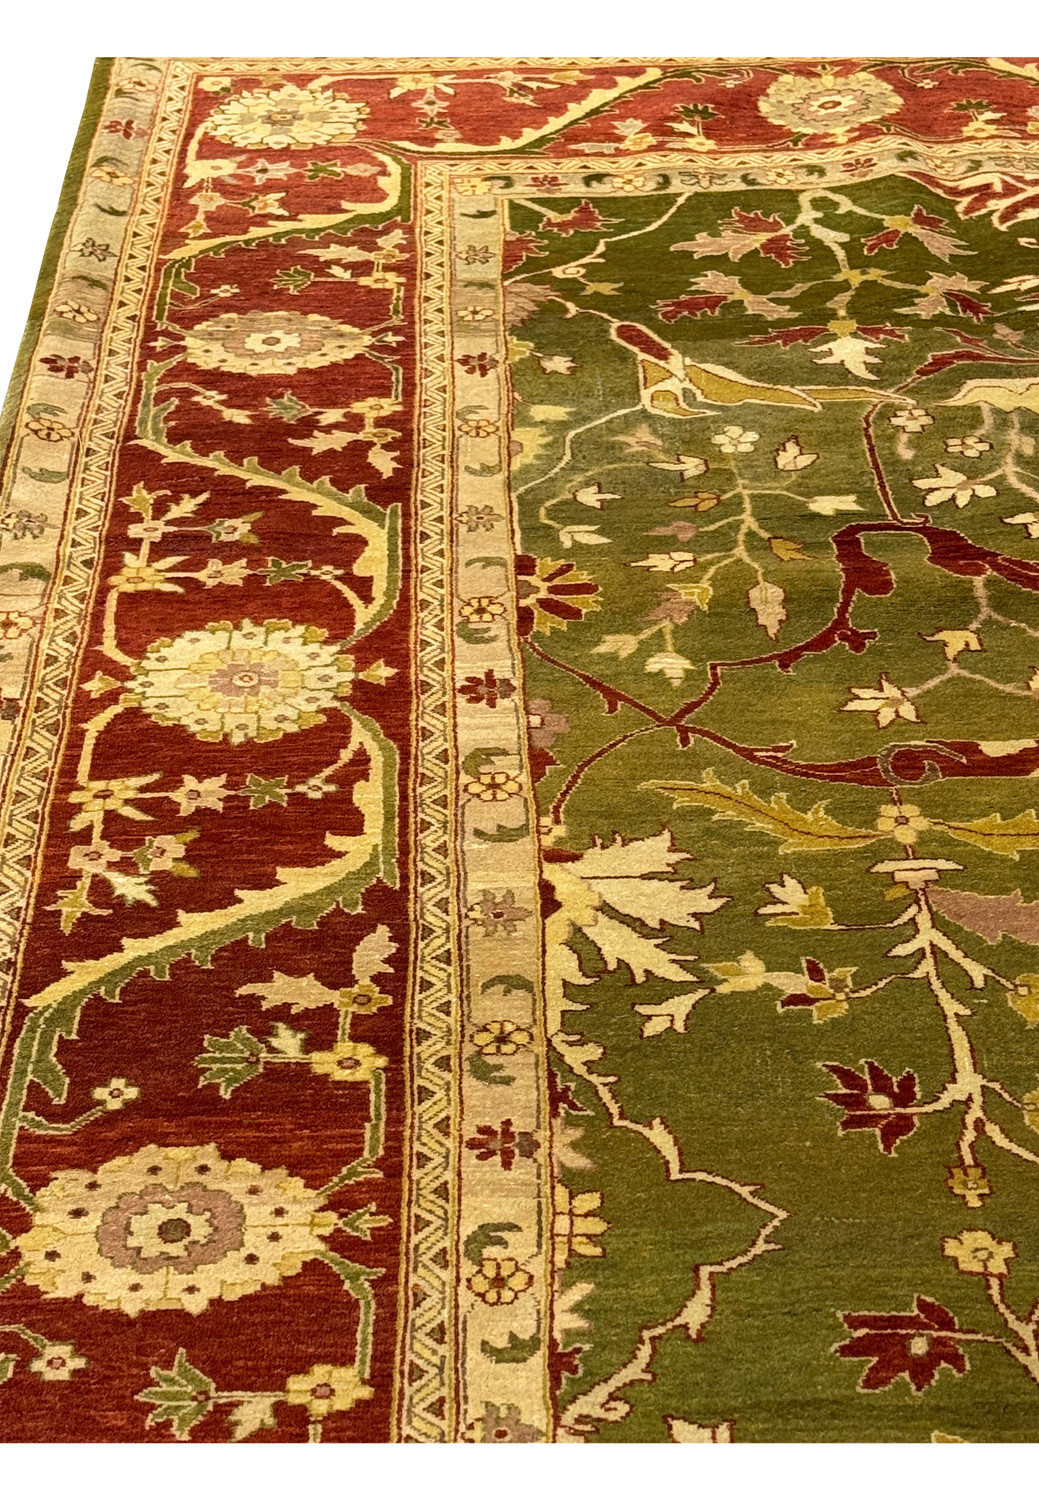 10x15 Oriental Chobi rug reflecting Peshawar's rich weaving heritage